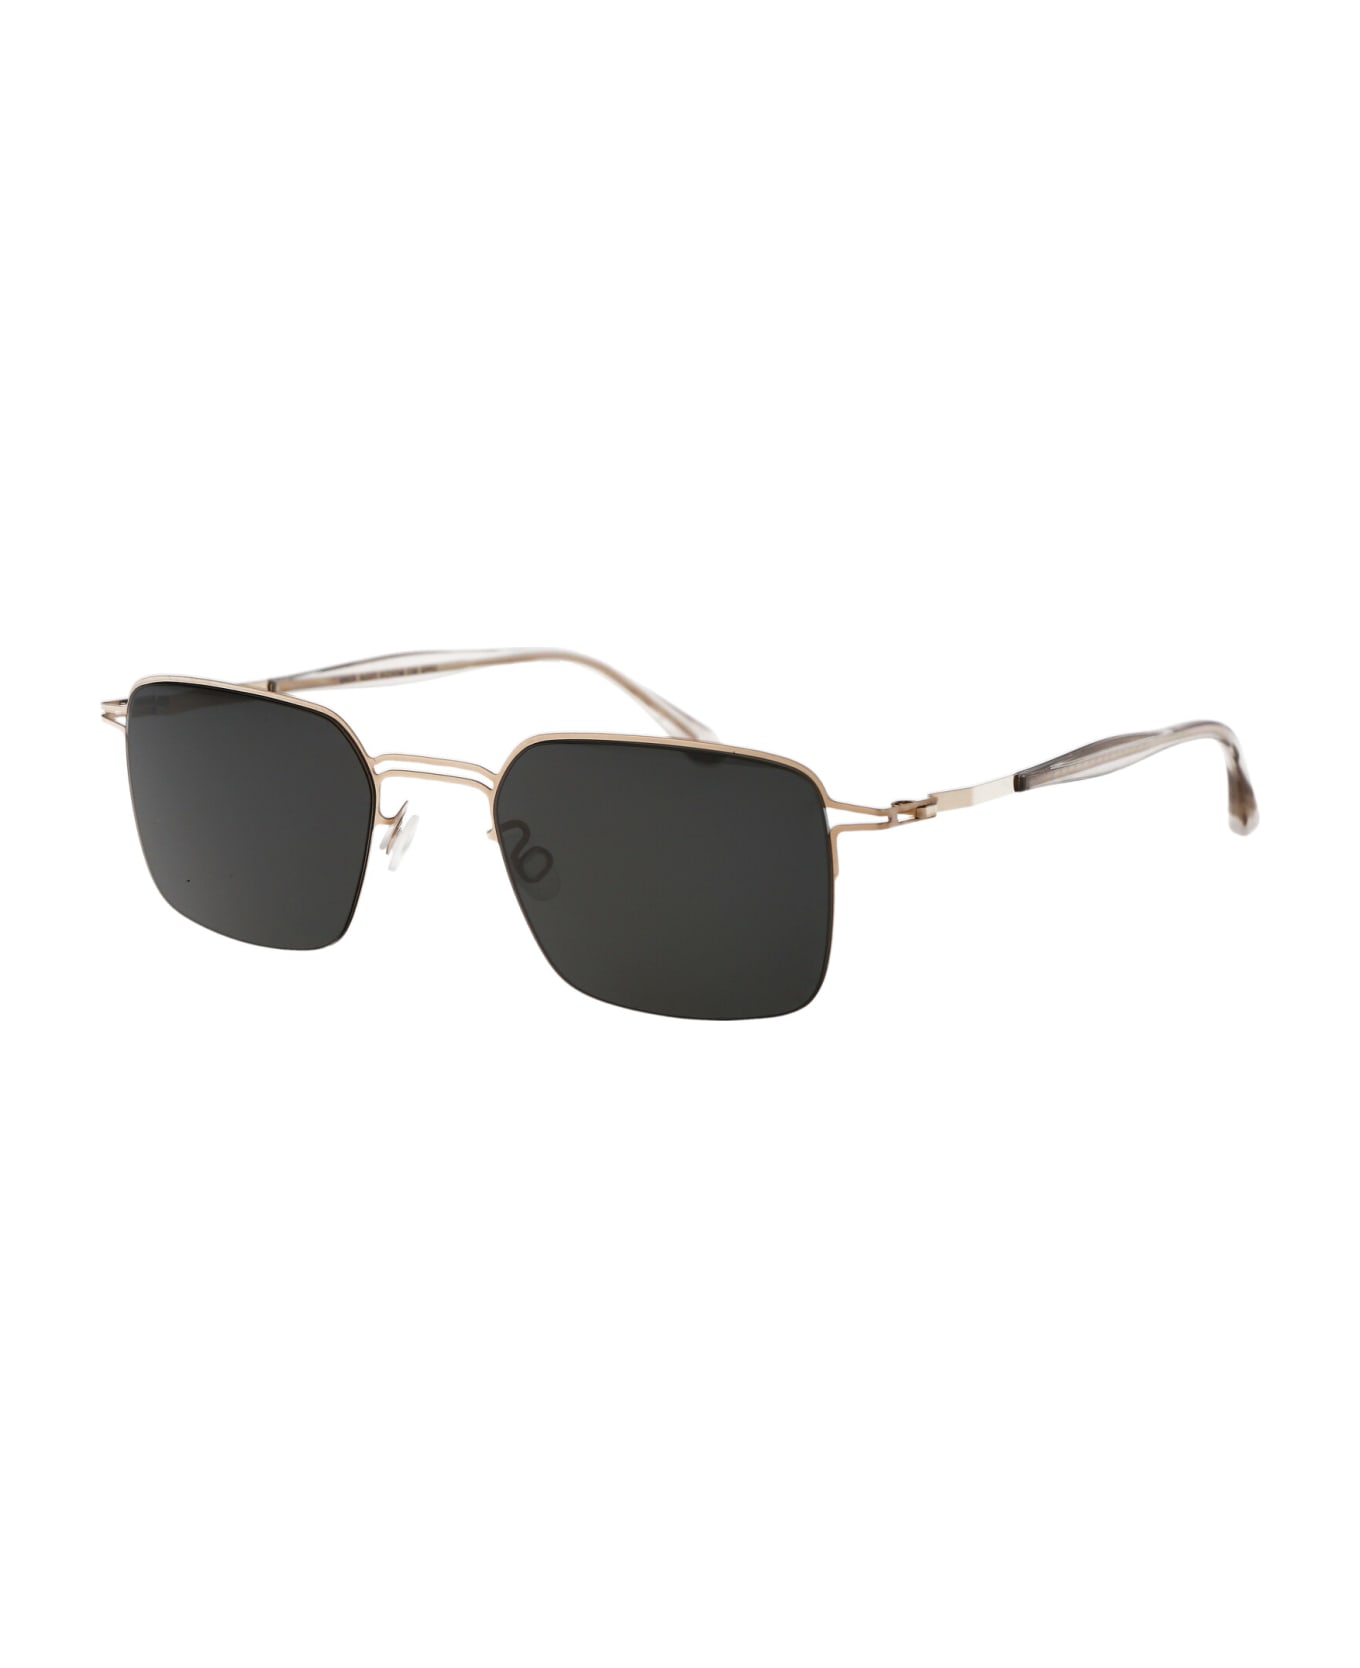 Mykita Alcott Sunglasses - 291 Champagne Gold Dark Grey Solid